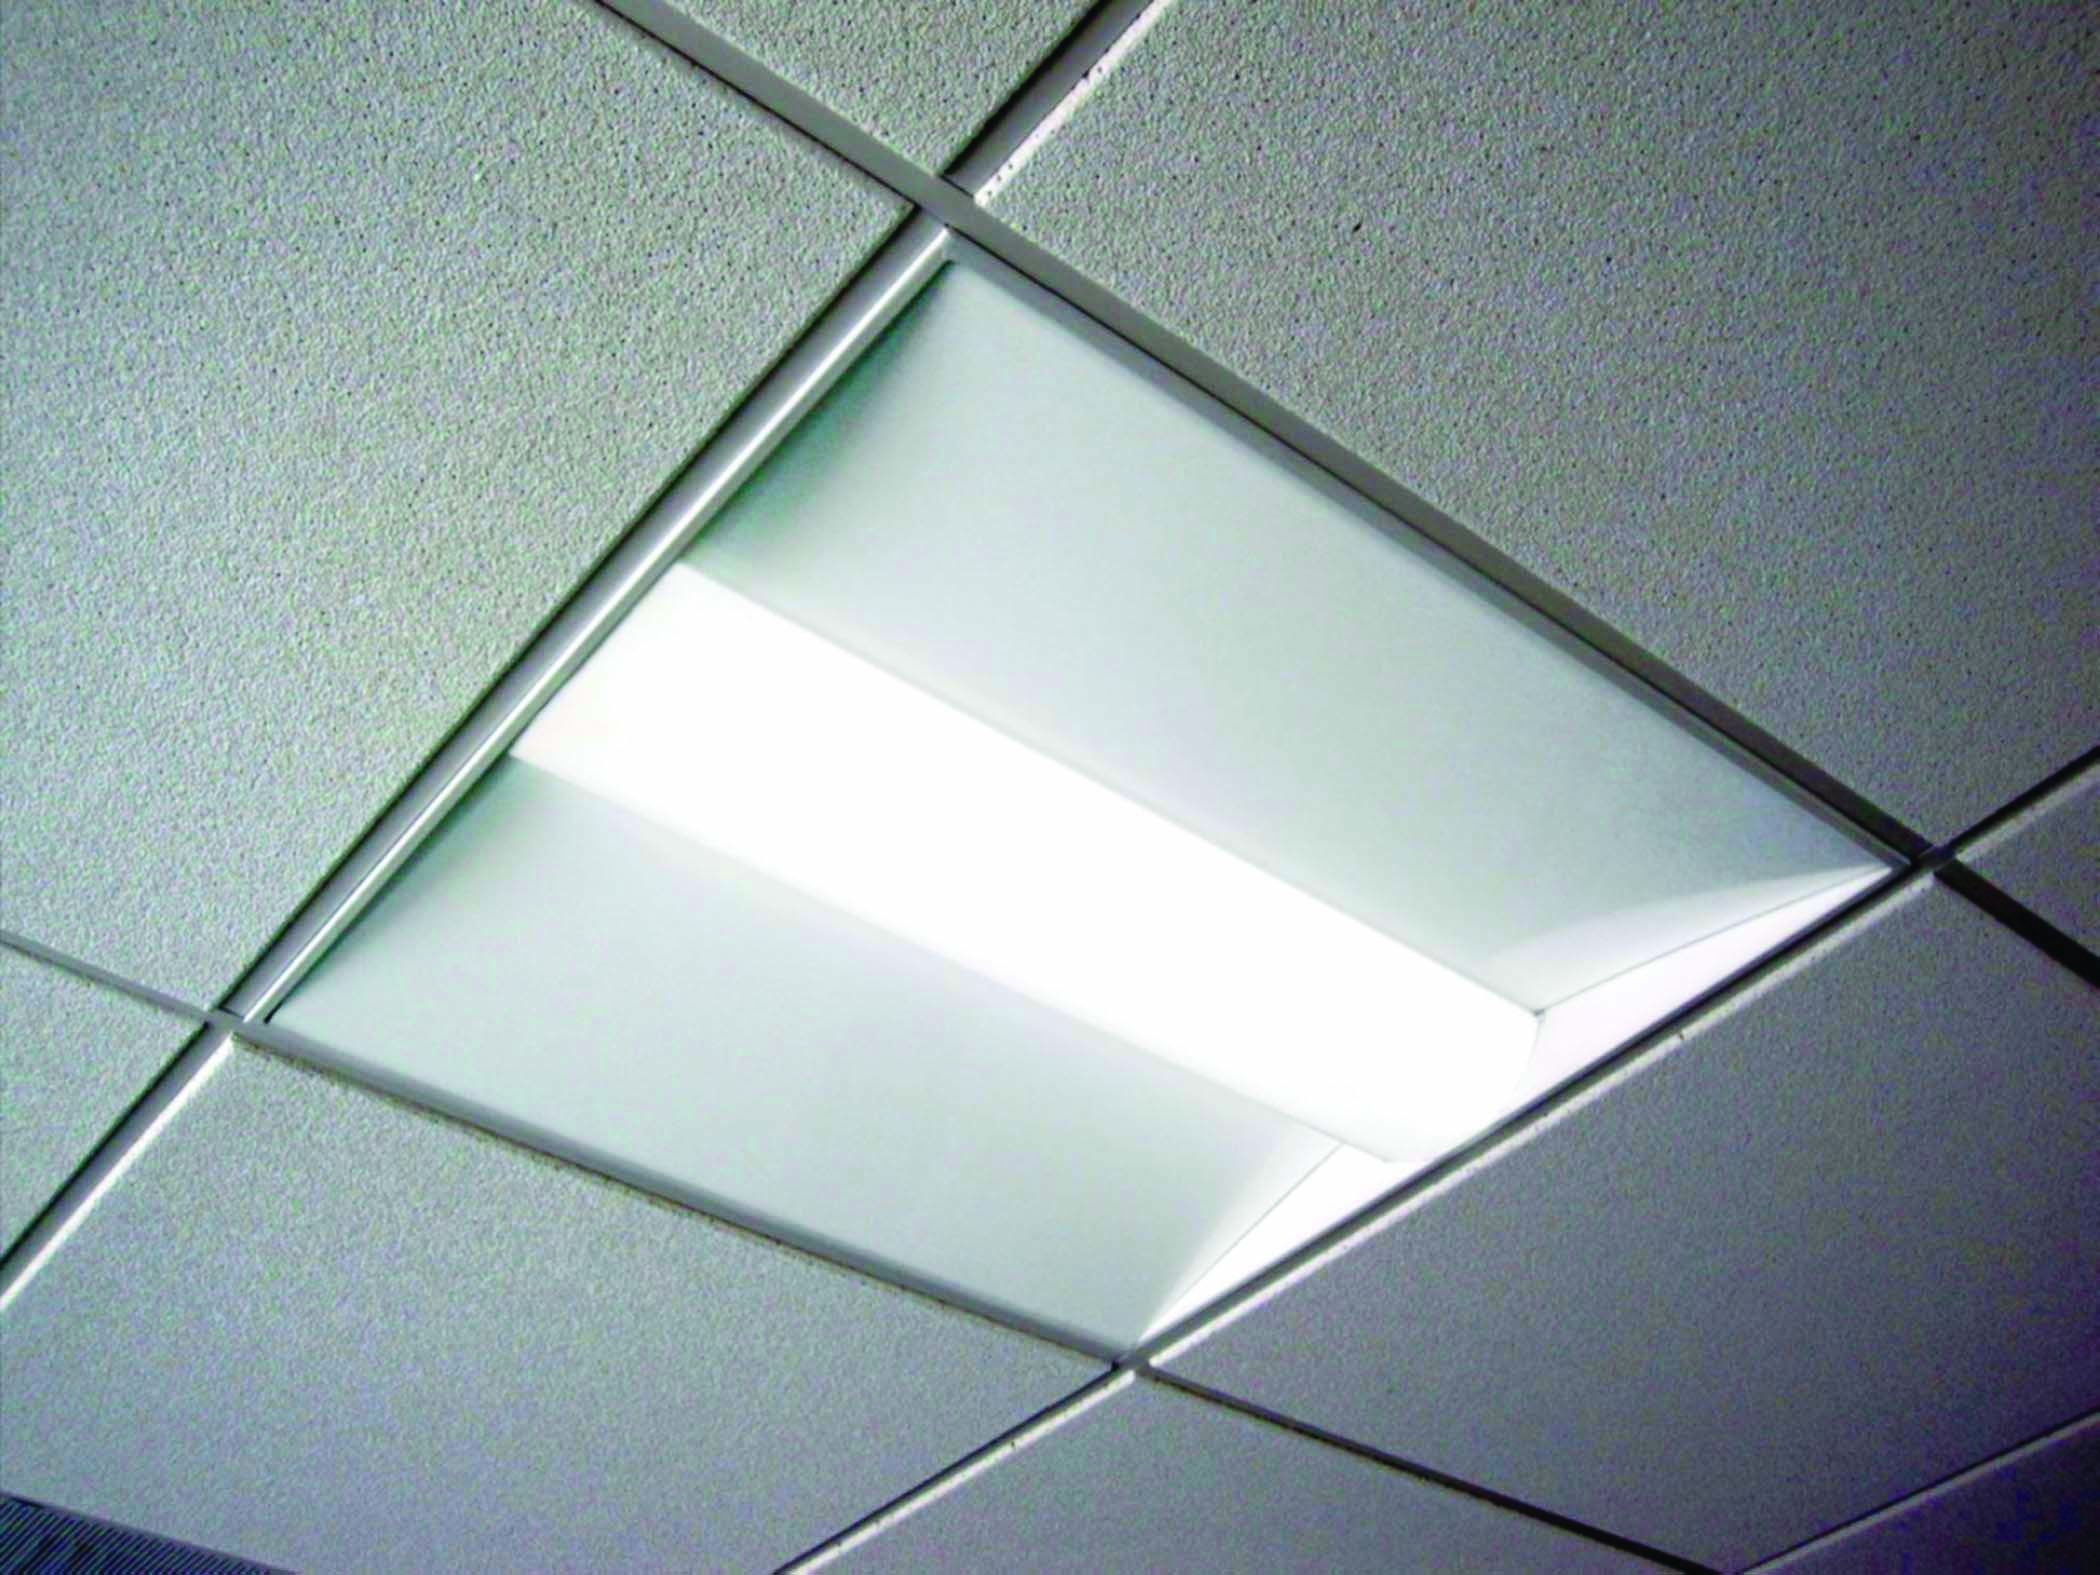 Led Ceiling Grid Lightsled suspended ceiling lights tips for buyers warisan lighting